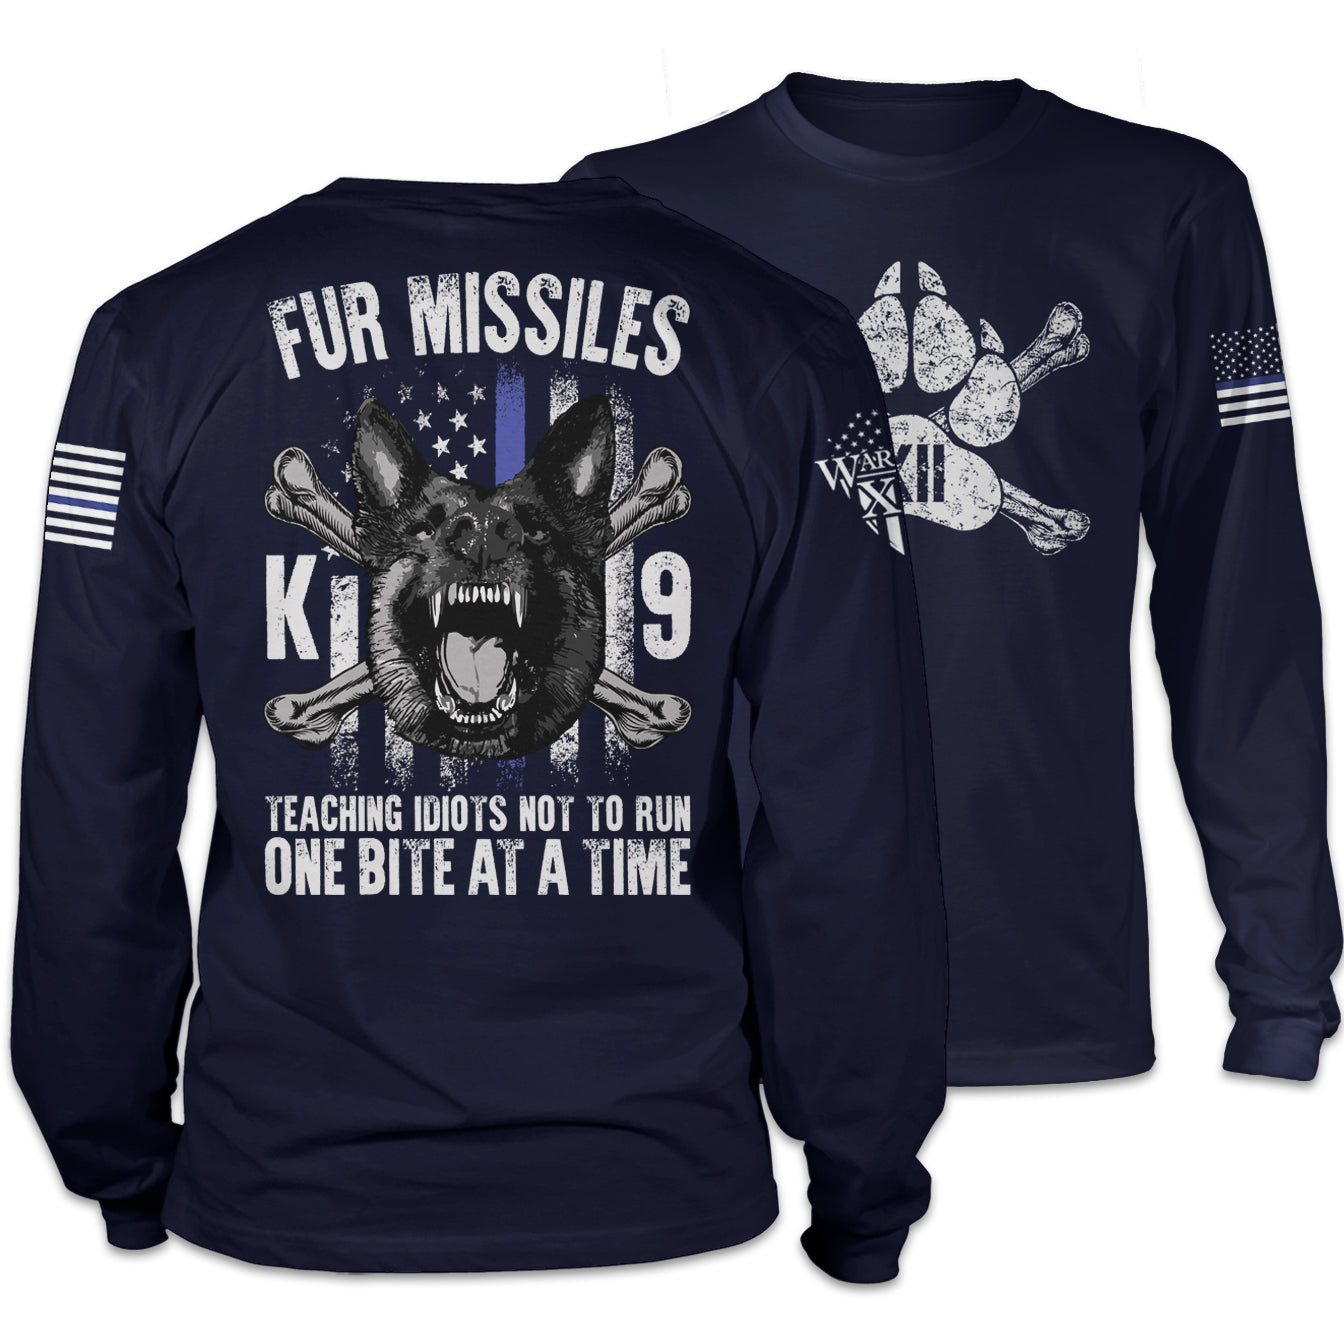 Fur Missile Long Sleeve